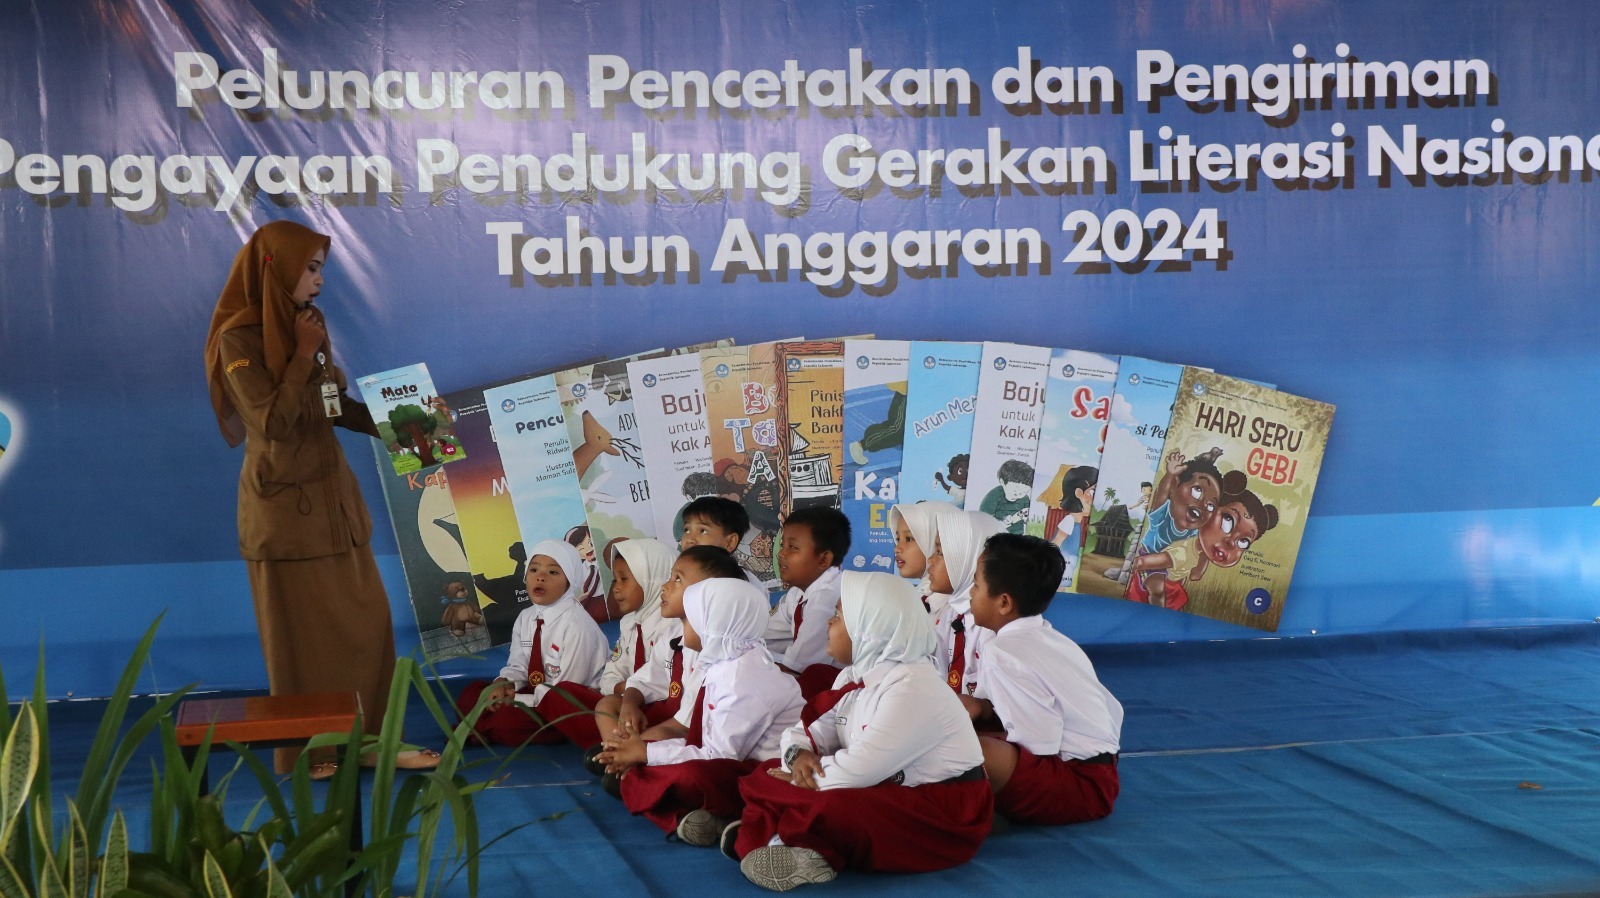 Skor Minat Baca Indonesia Turun 18 Poin, 4 Juta Eksemplar Buku Disebar ke Sekolah